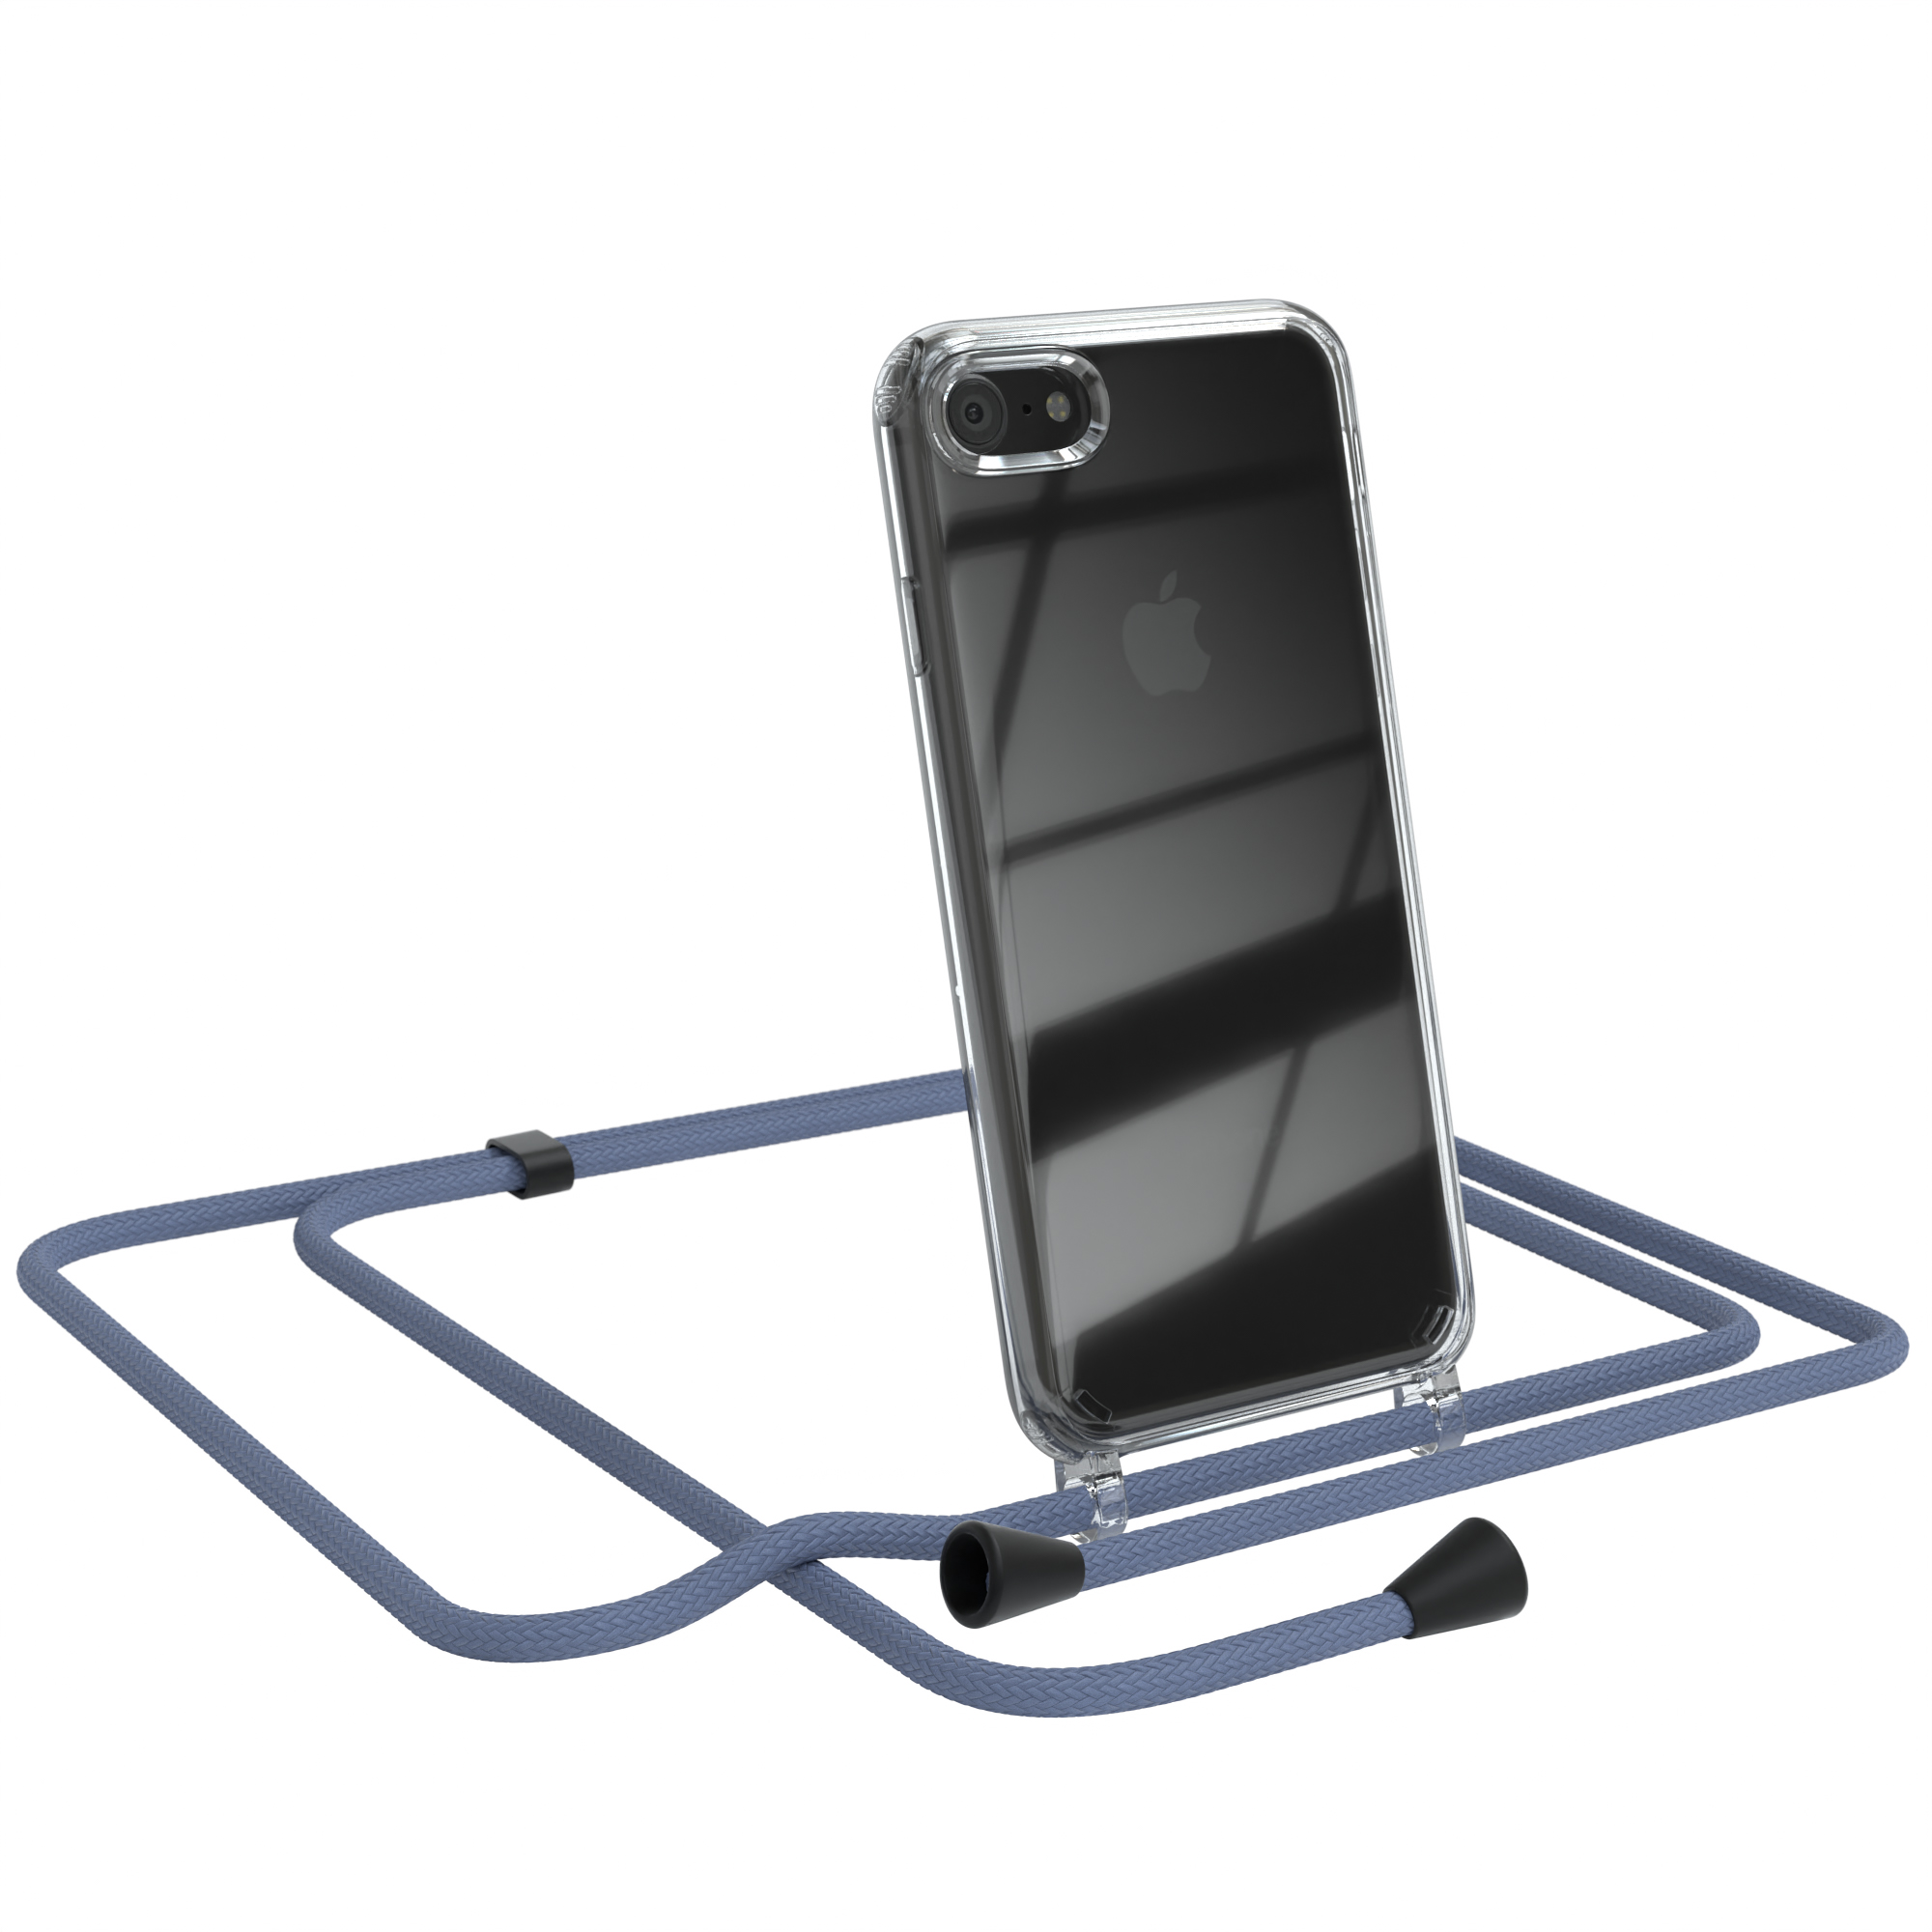 EAZY CASE Clear / Blau 8, iPhone mit 2022 / SE Umhängetasche, Apple, SE 7 iPhone Umhängeband, 2020, Cover